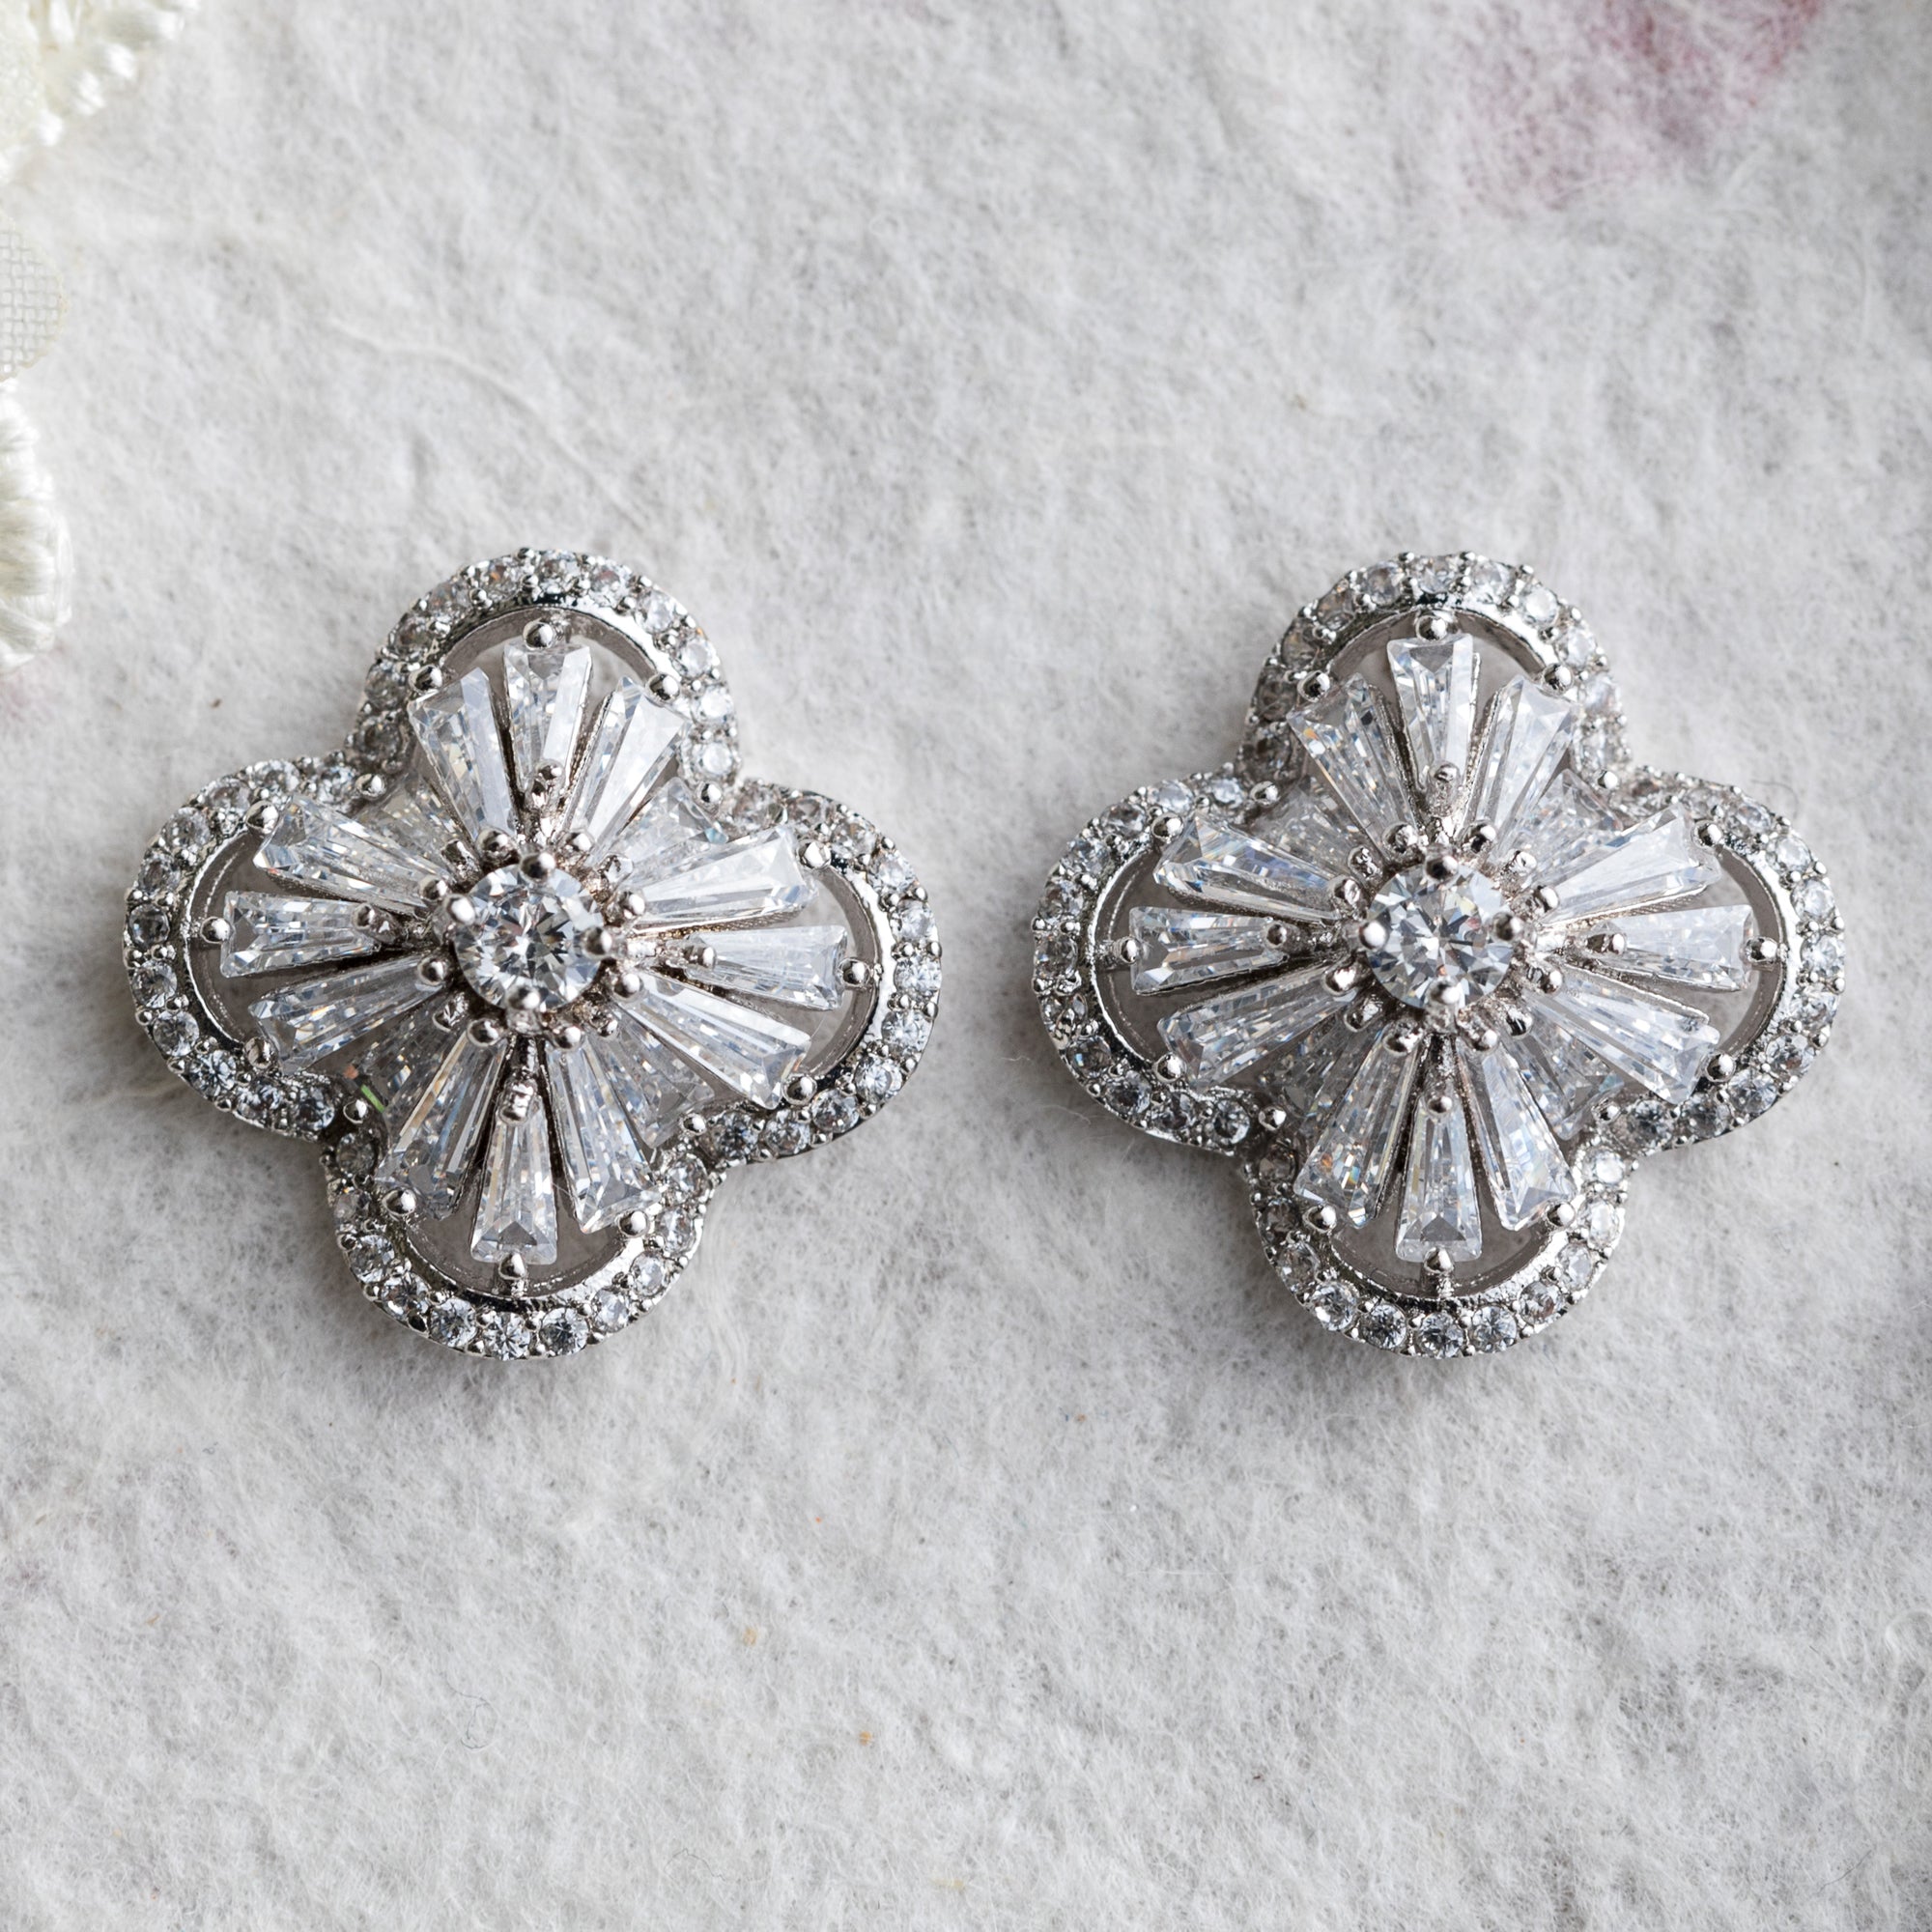 Hina silver crystal stud earrings